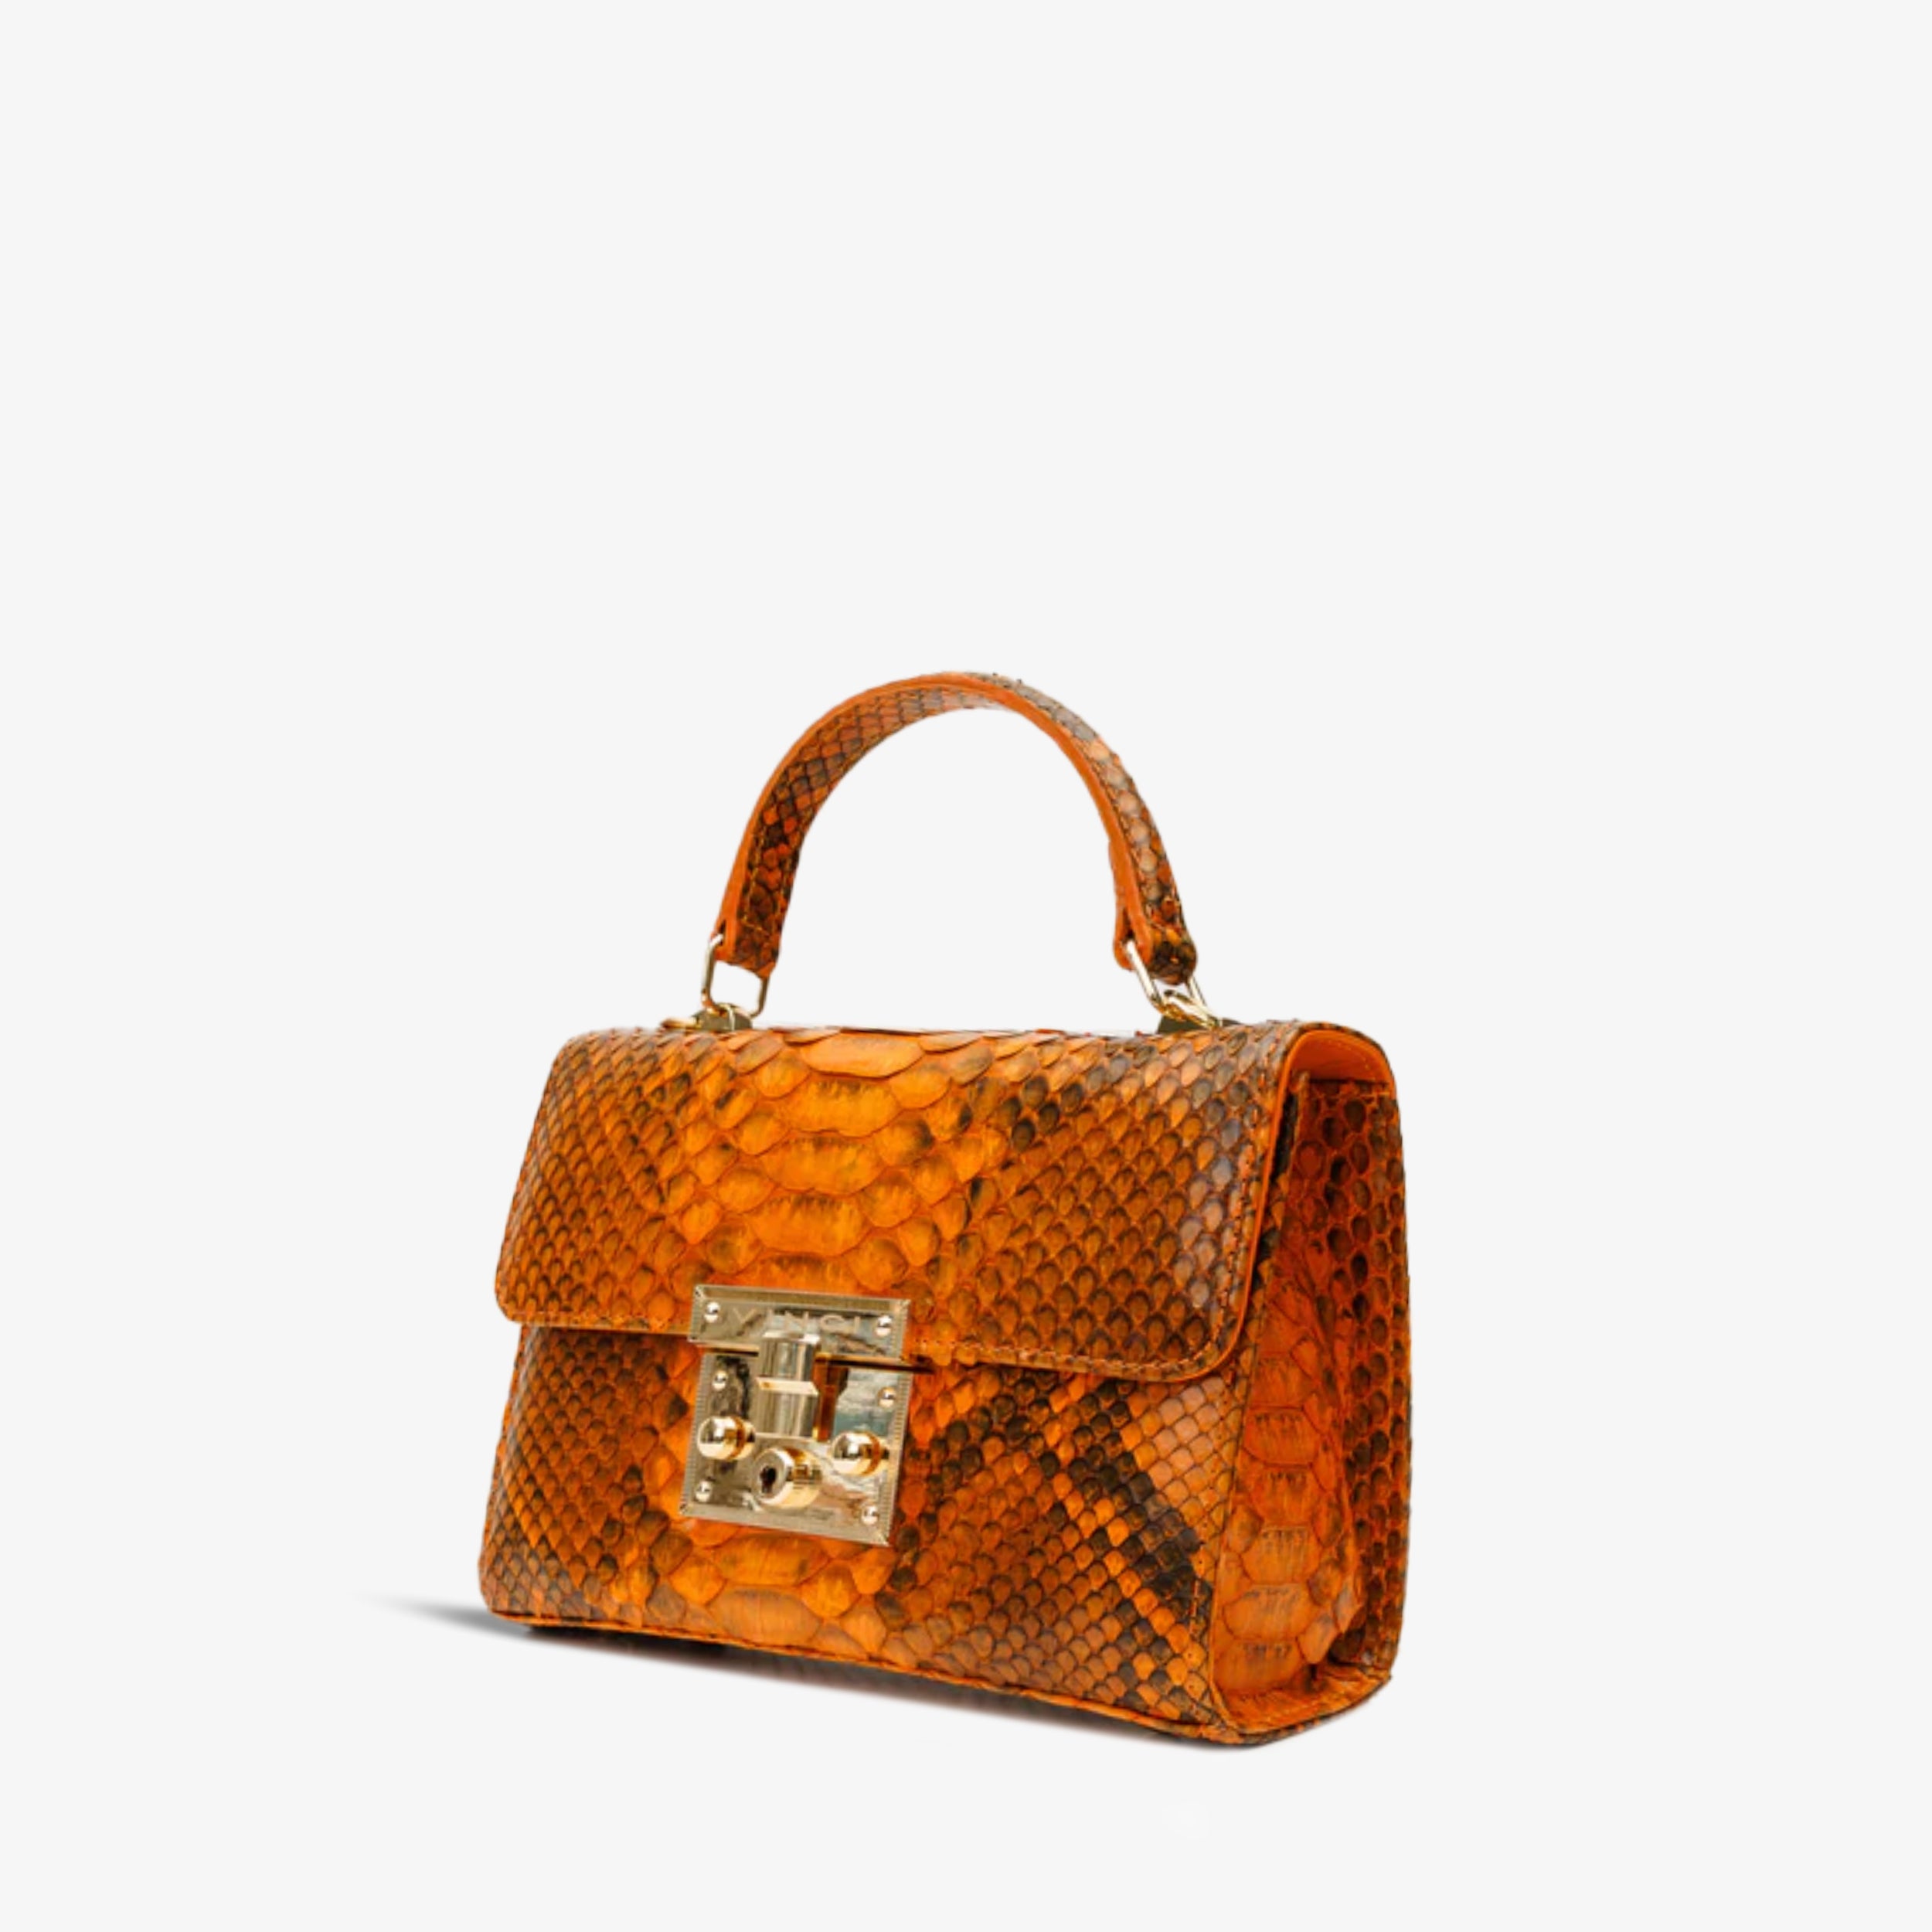 The Queen Orange Pythn Leather Handbag